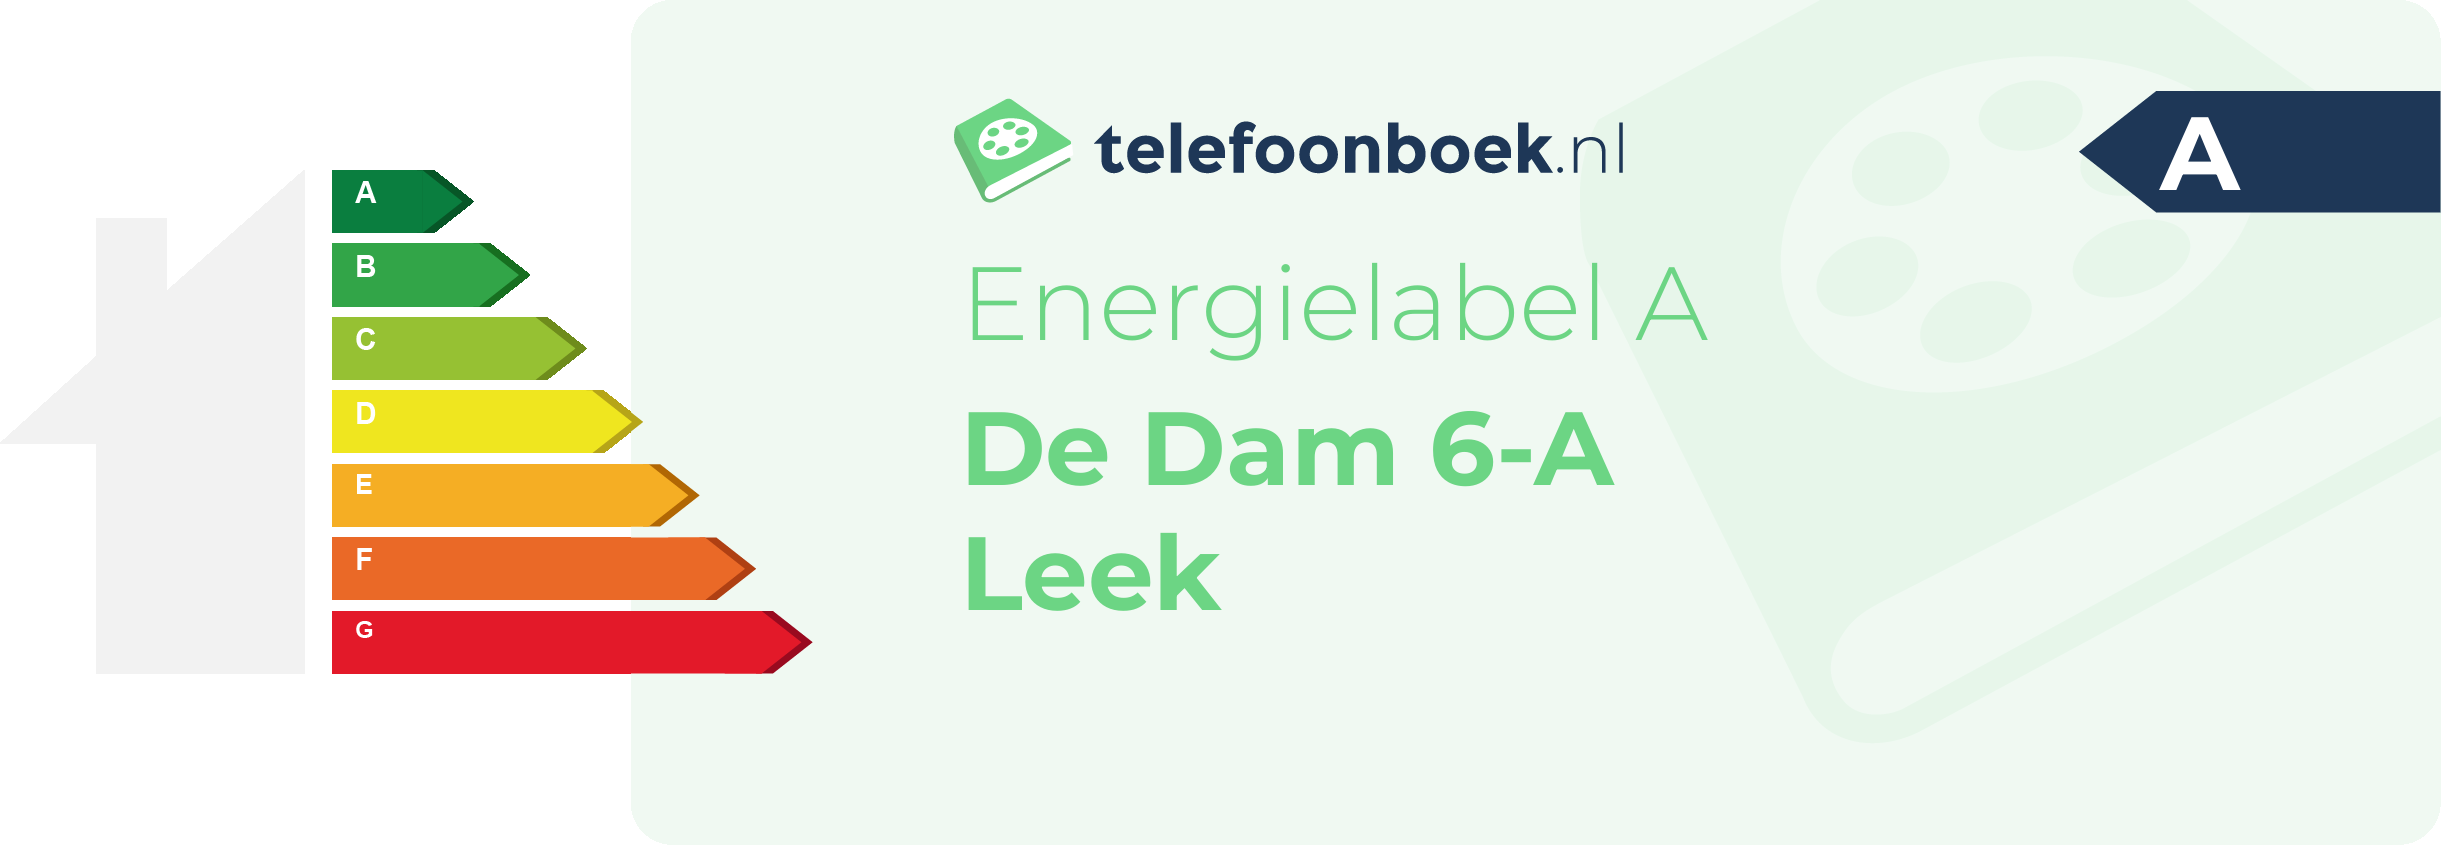 Energielabel De Dam 6-A Leek